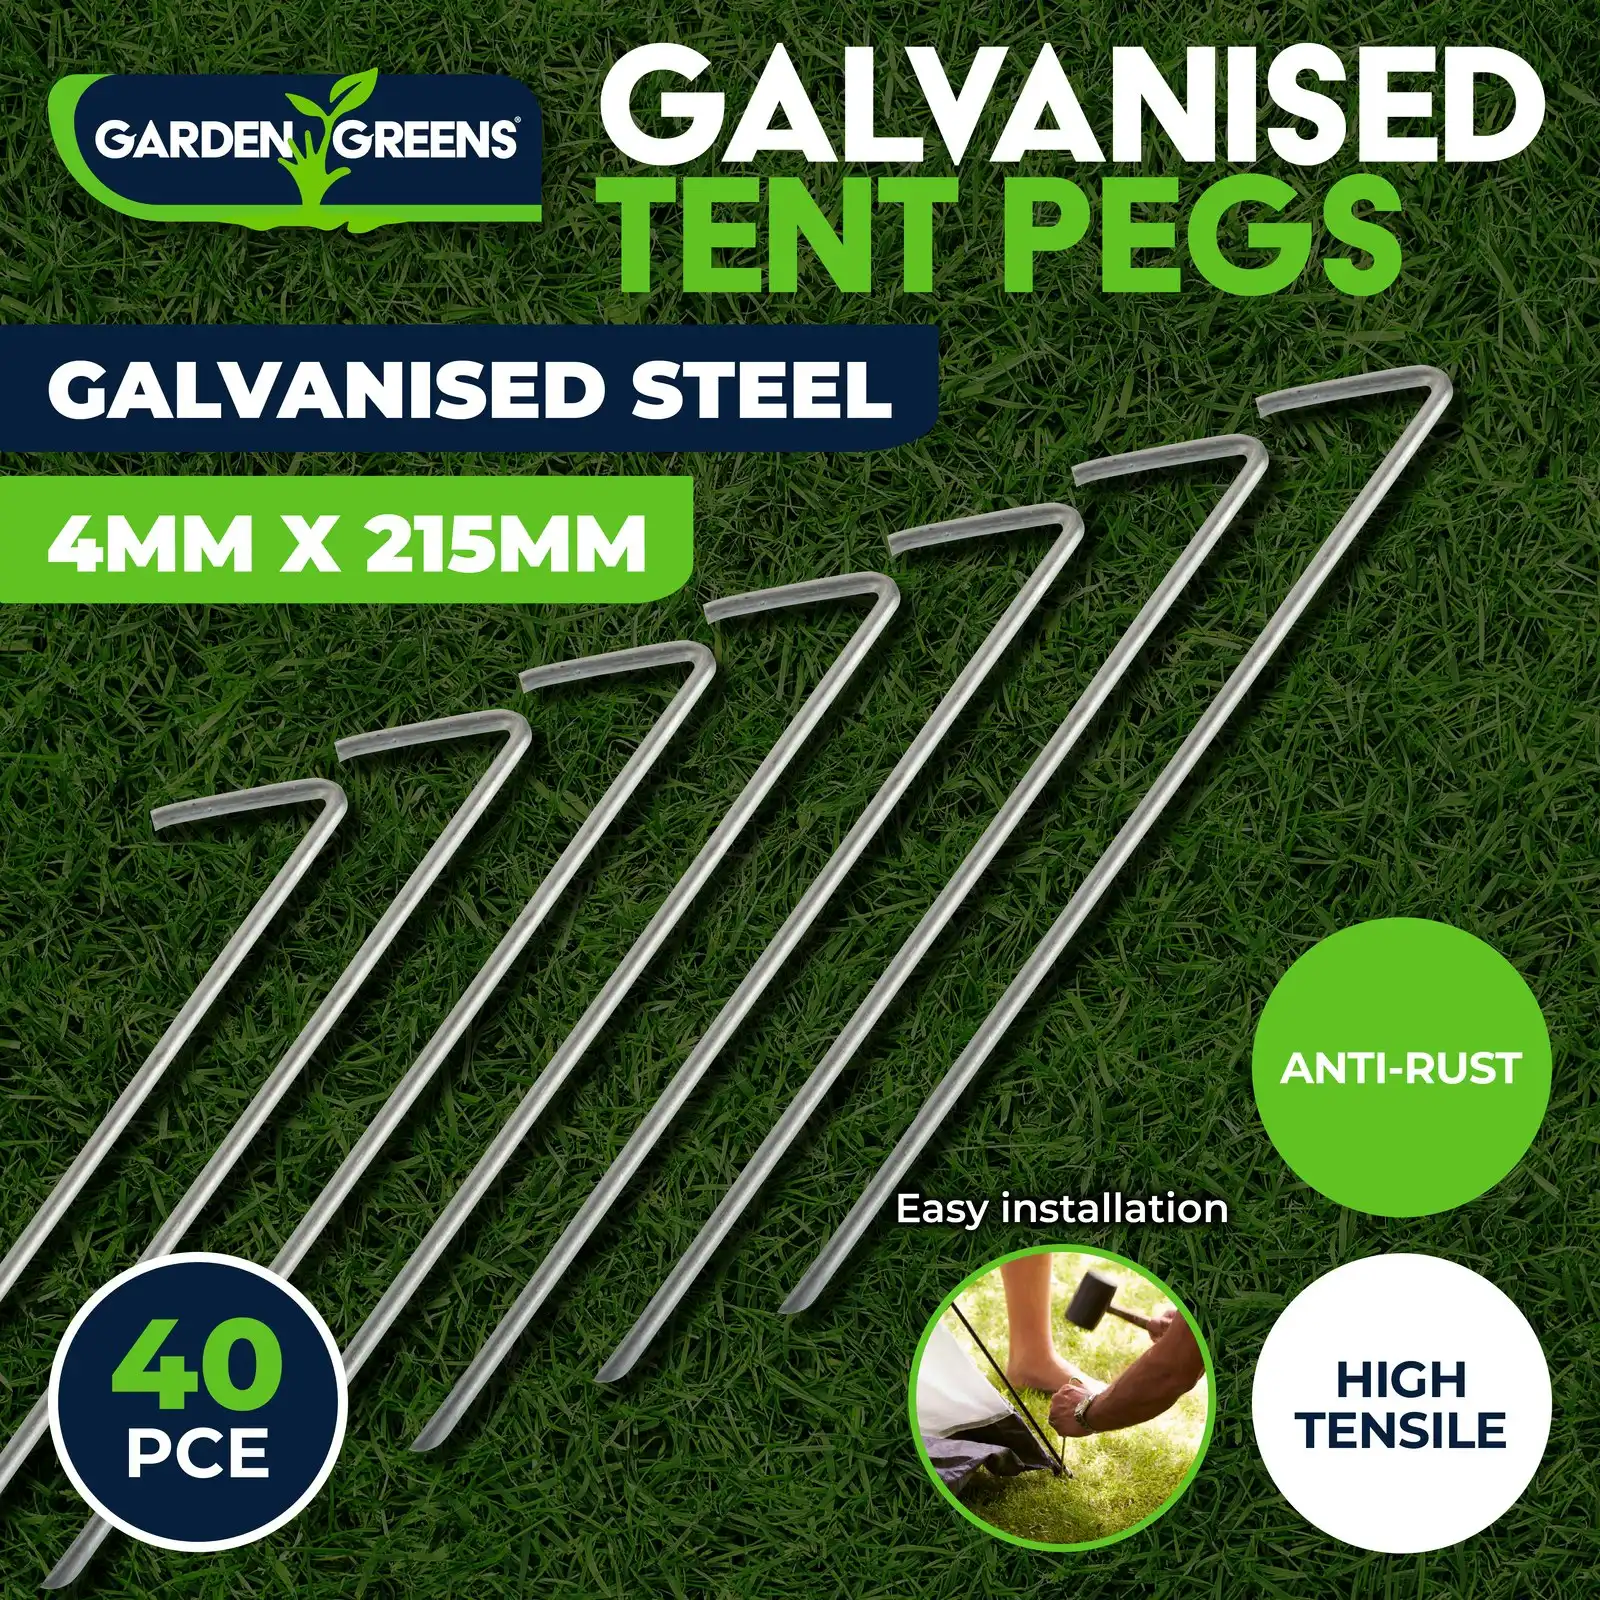 Garden Greens 40PCE Tent Pegs Multi Purpose Anti Rust High Tensile 4 x 215mm